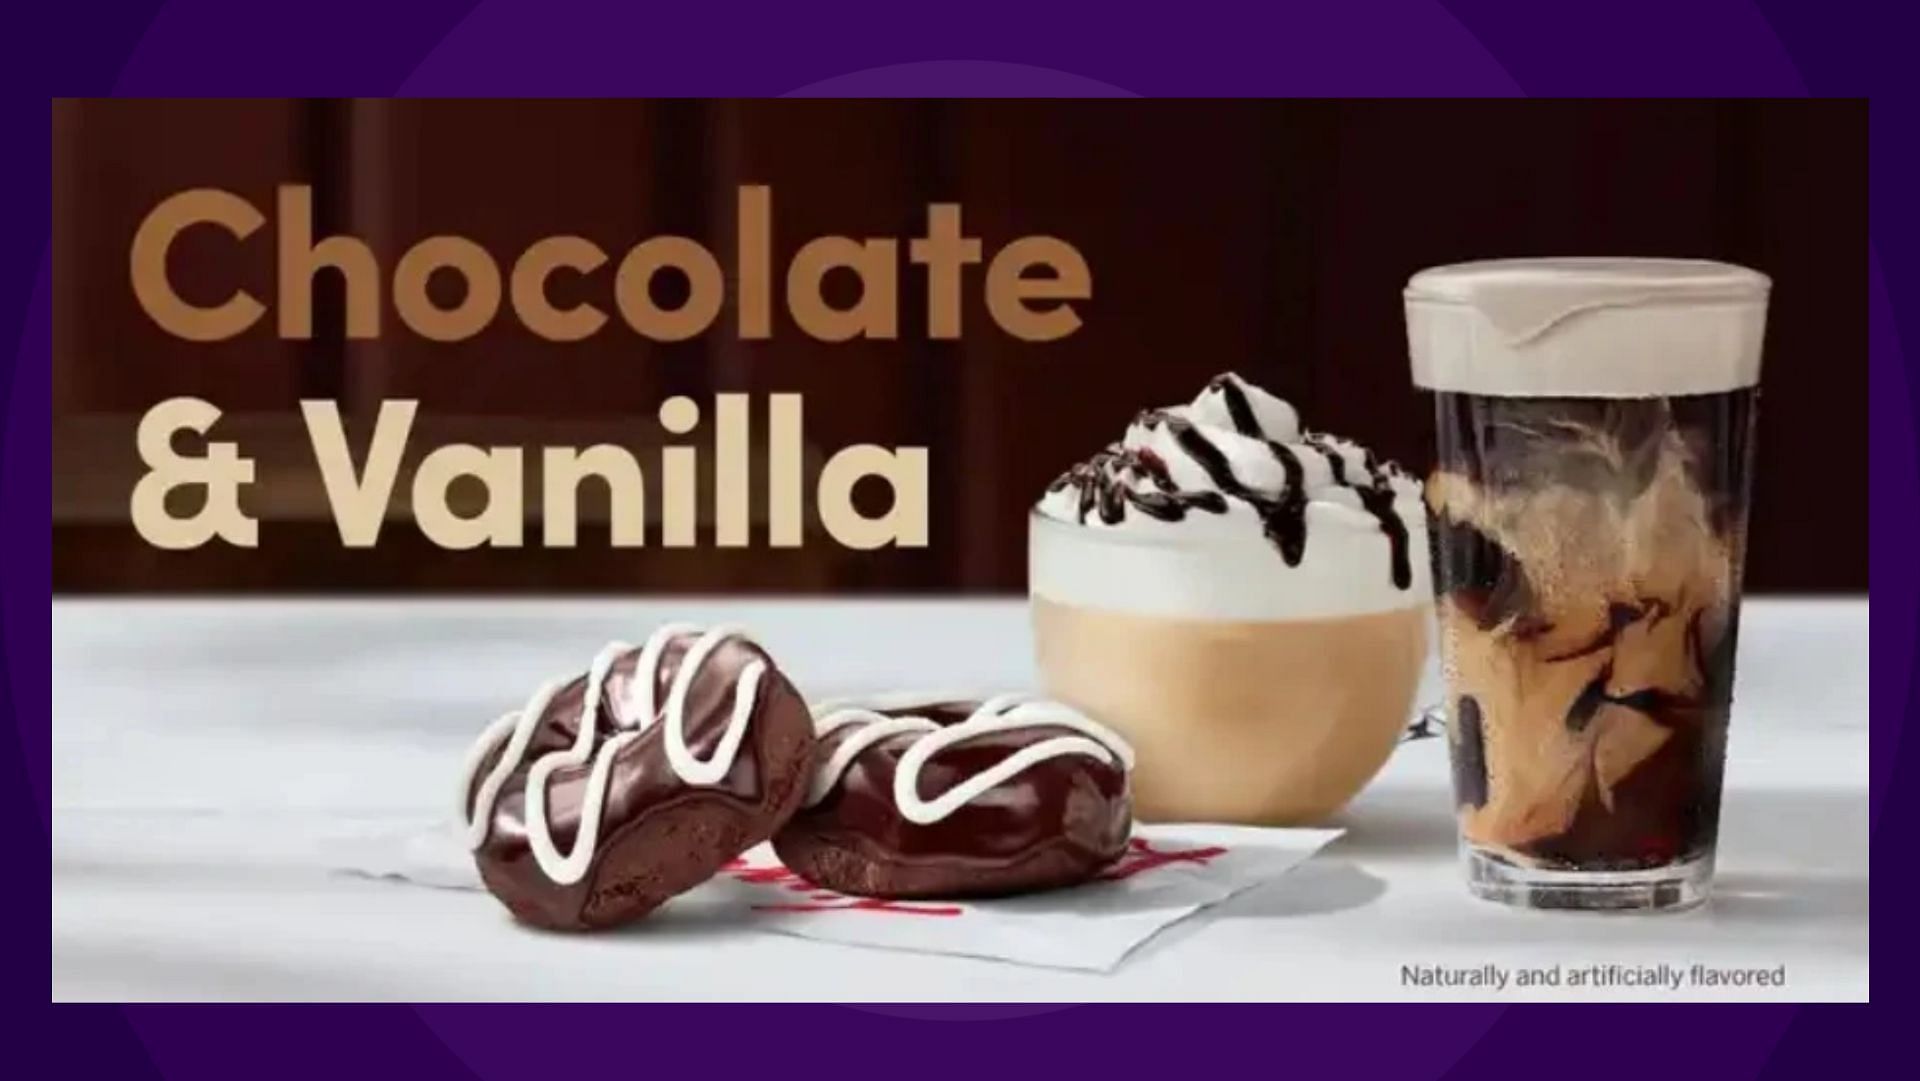 All new Tim Hortons&rsquo; Chocolate and Vanilla flavor menu! (Image via Tim Hortons